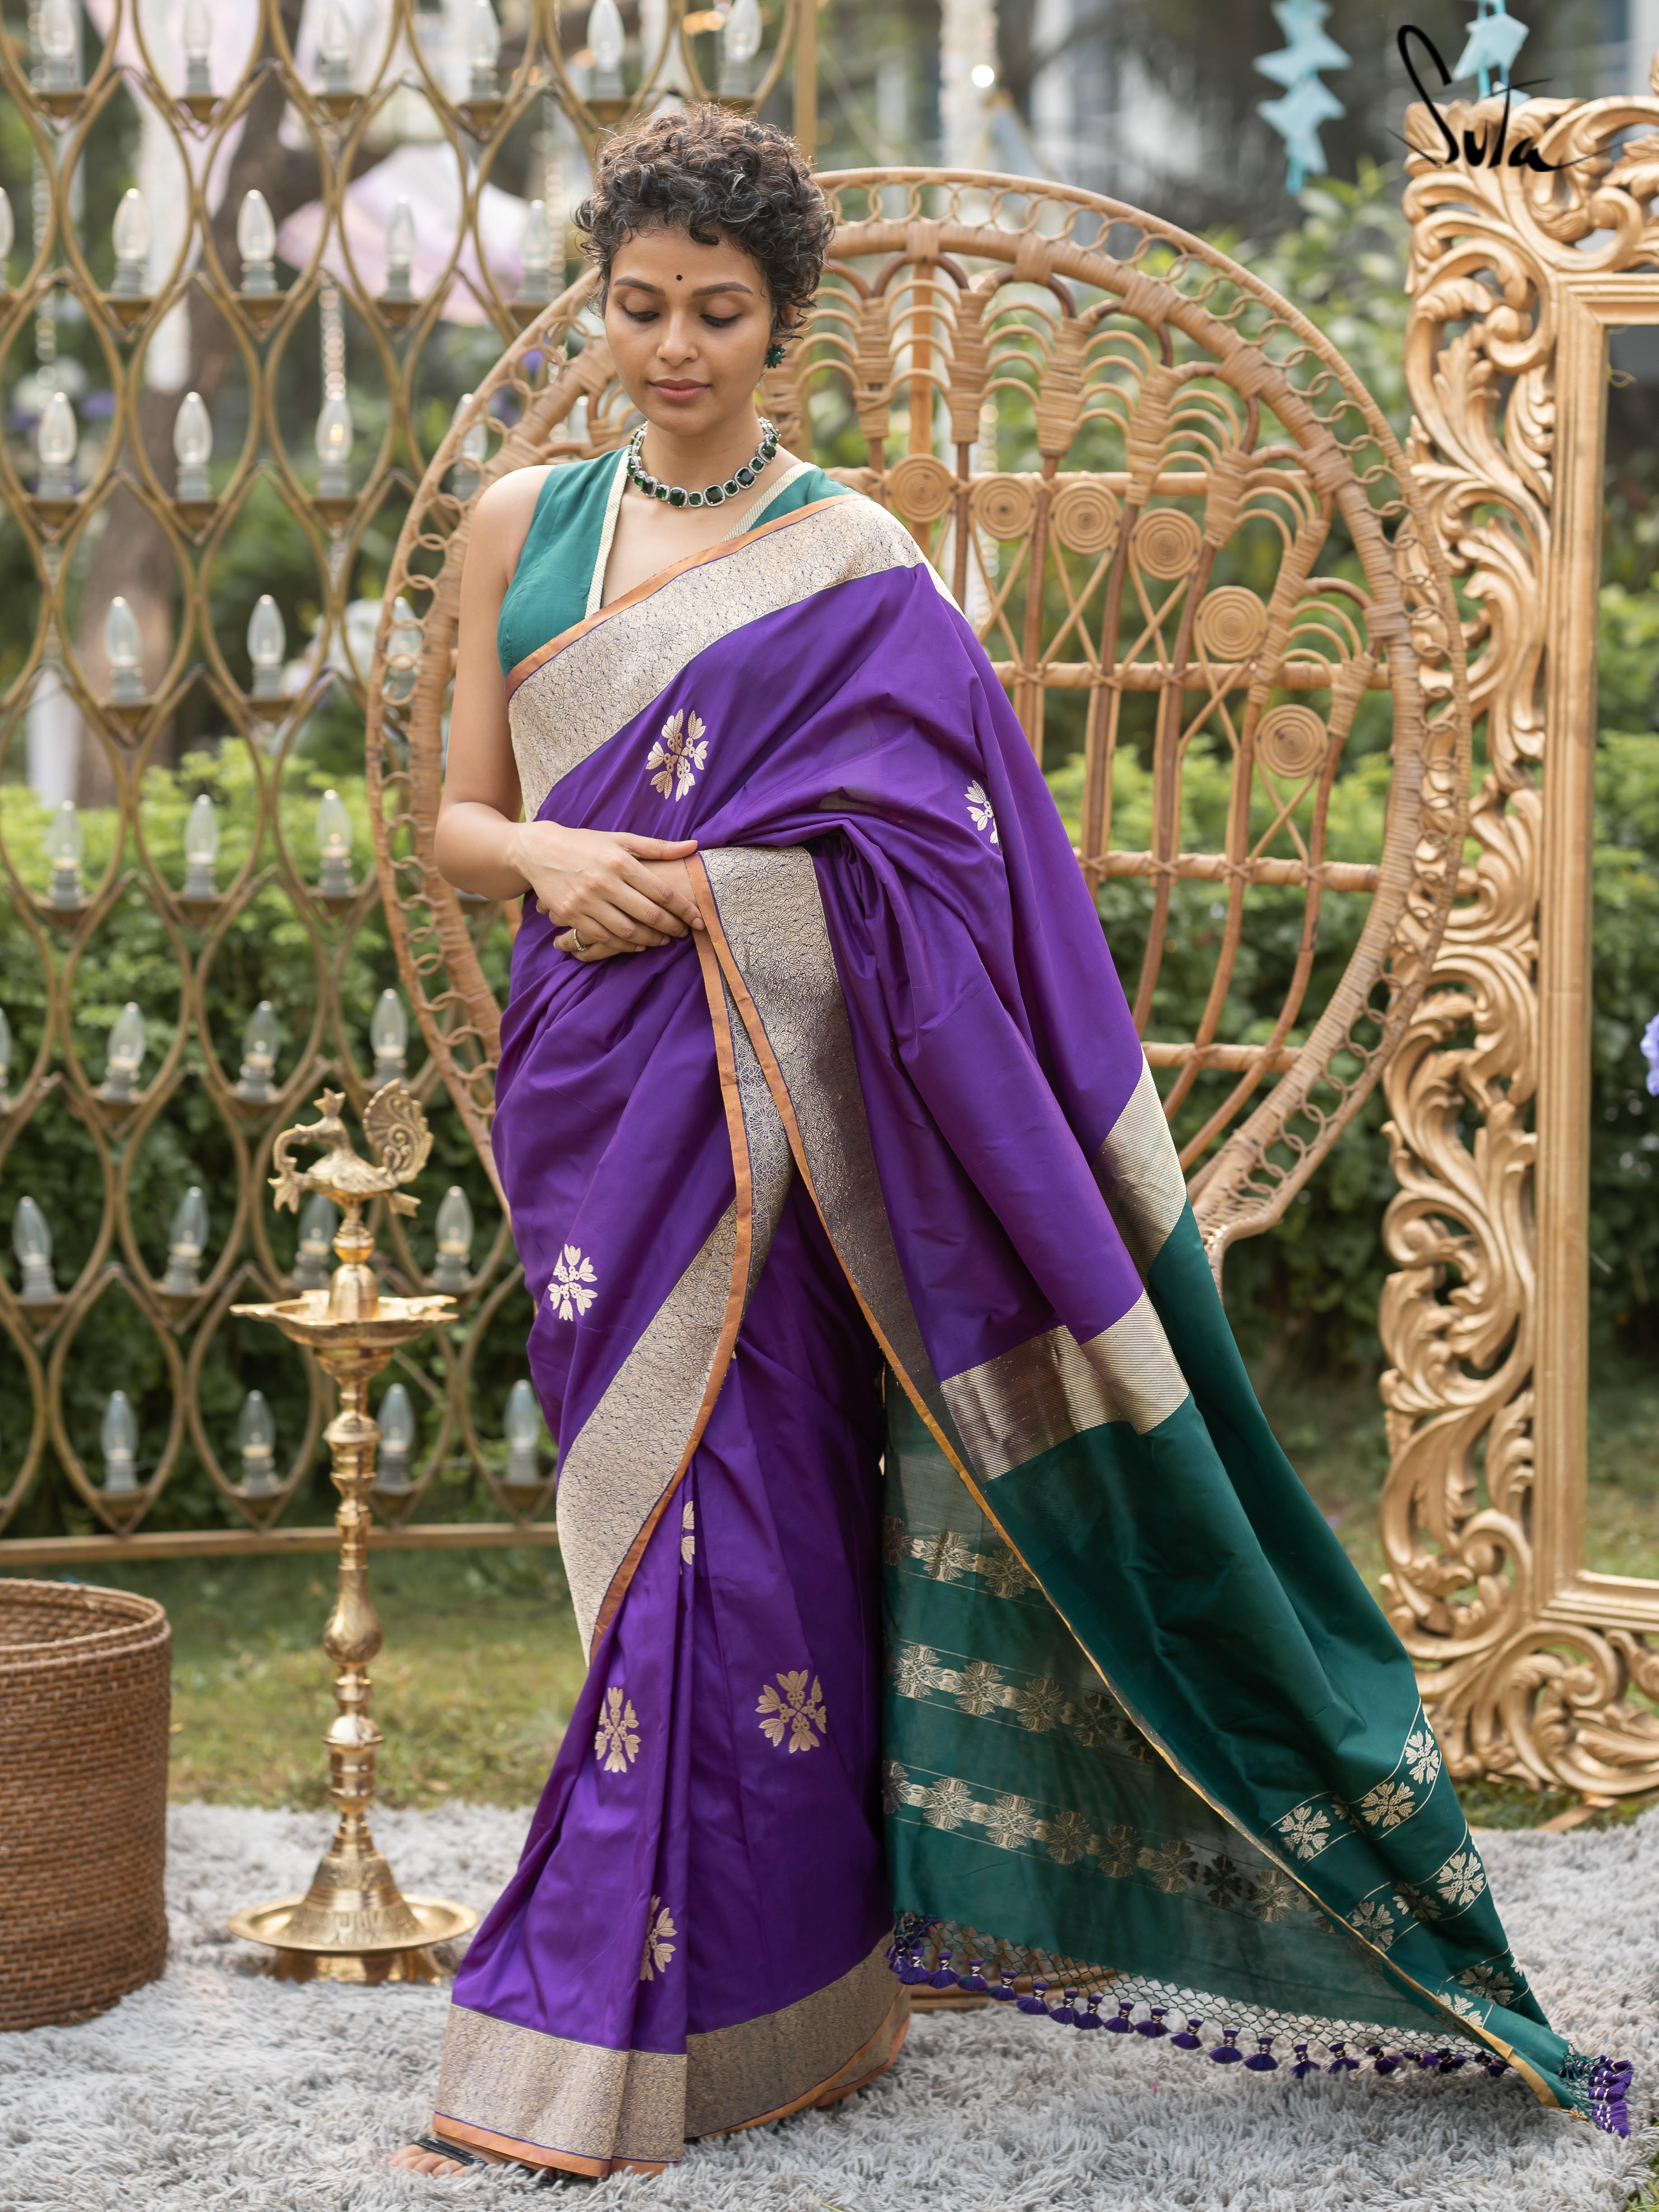 Sky Blue Saree/sari Combination Blouse | Saree Blouse Contrast Ideas  designs - YouTube